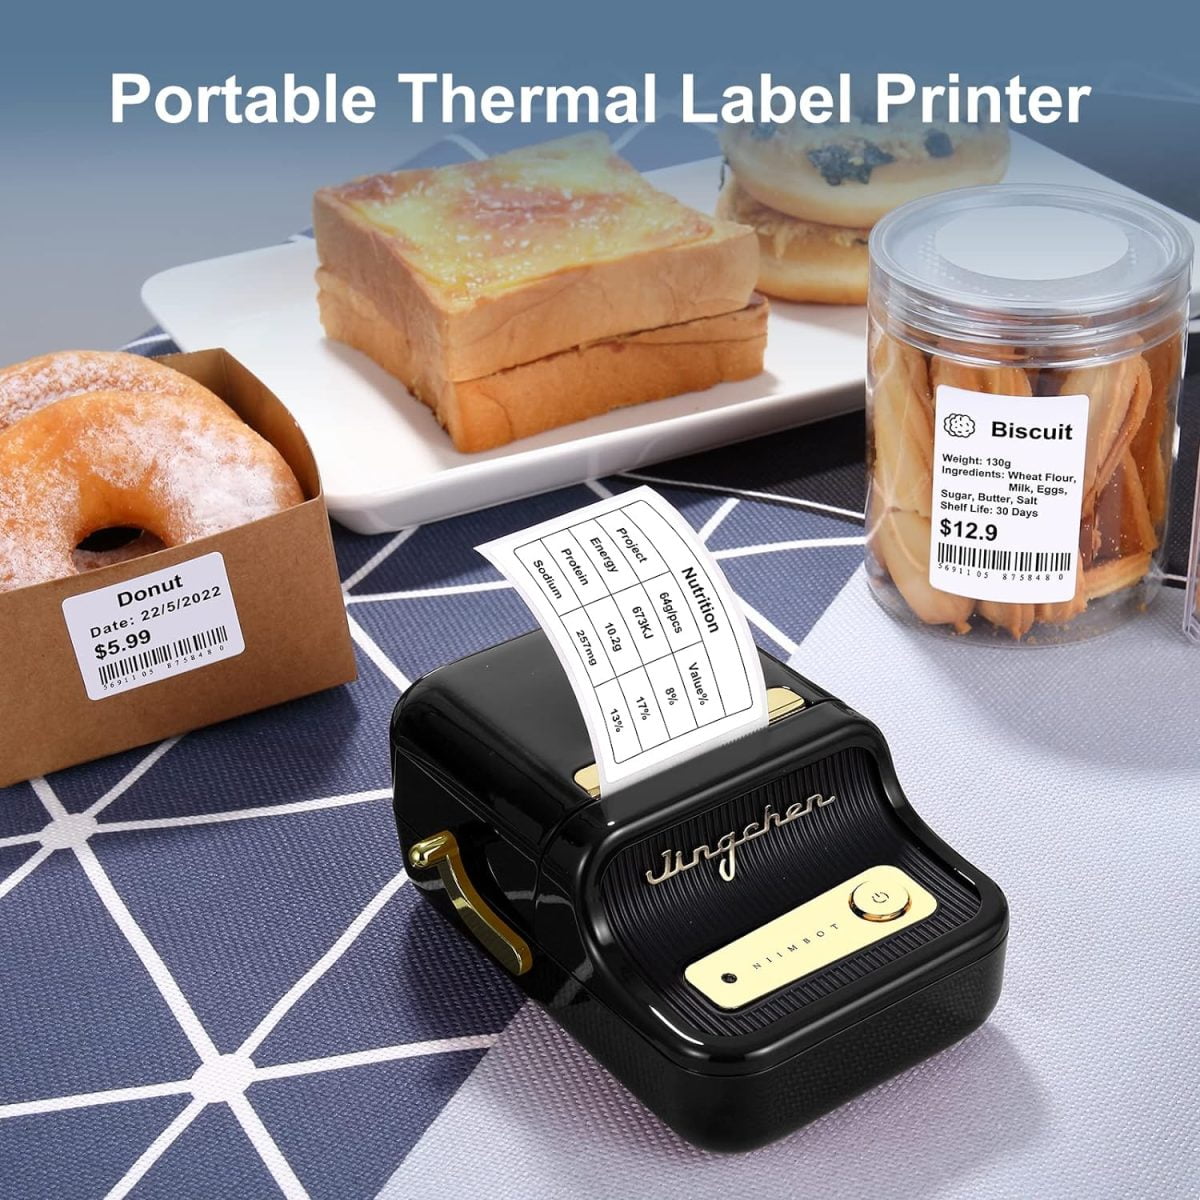 Niimbot B21 Label Maker Portable Thermal Label Printer - Black